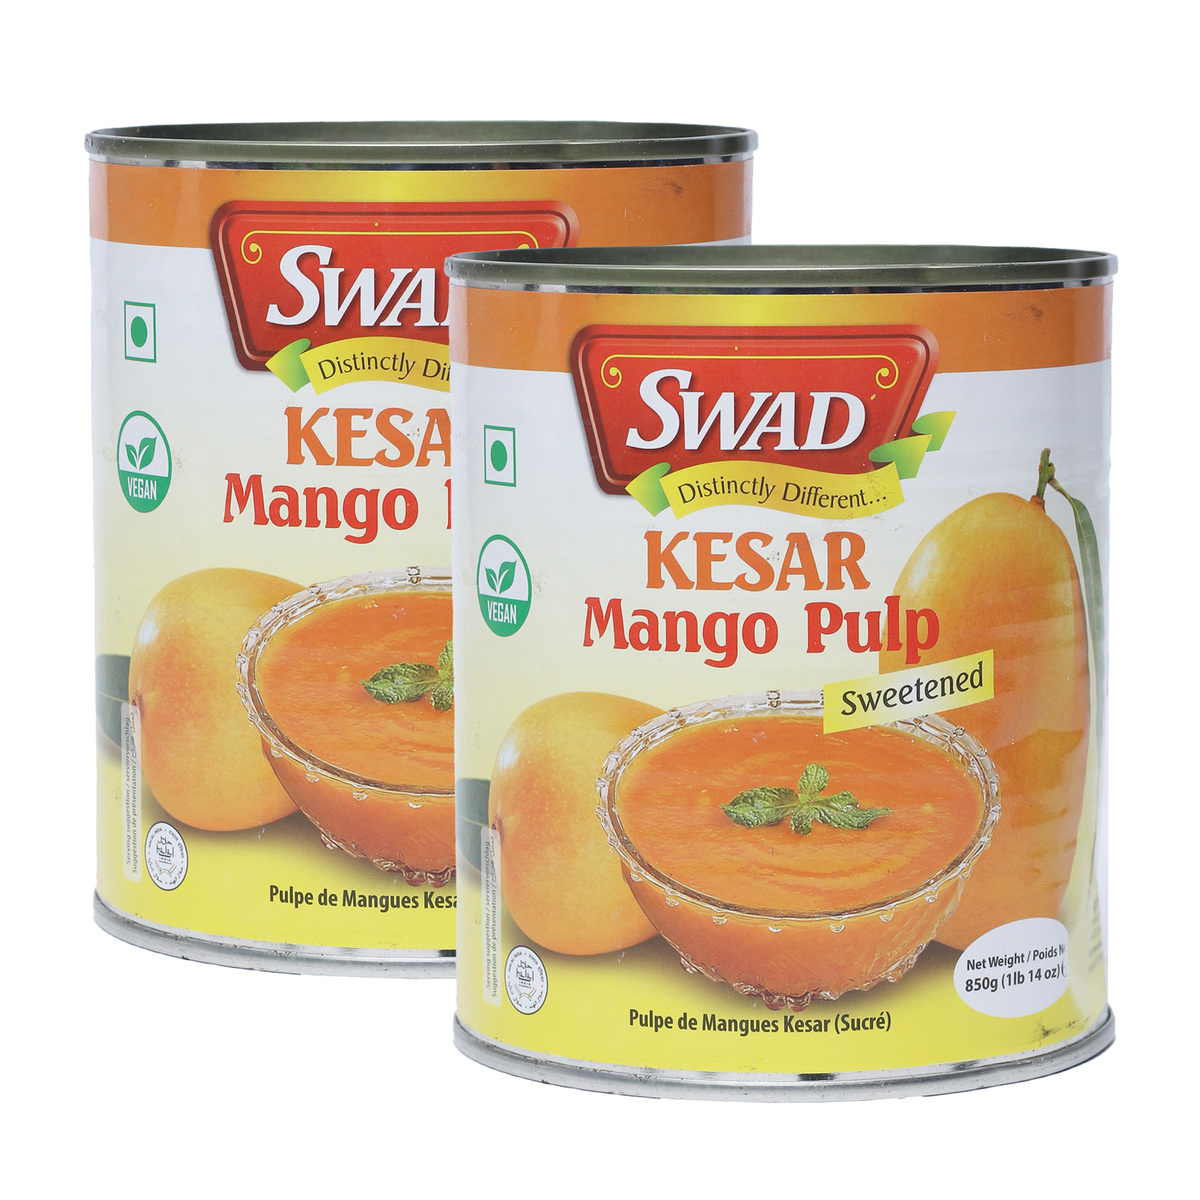 Swad Kesar Mango Pulp Value Pack 2 x 850 g